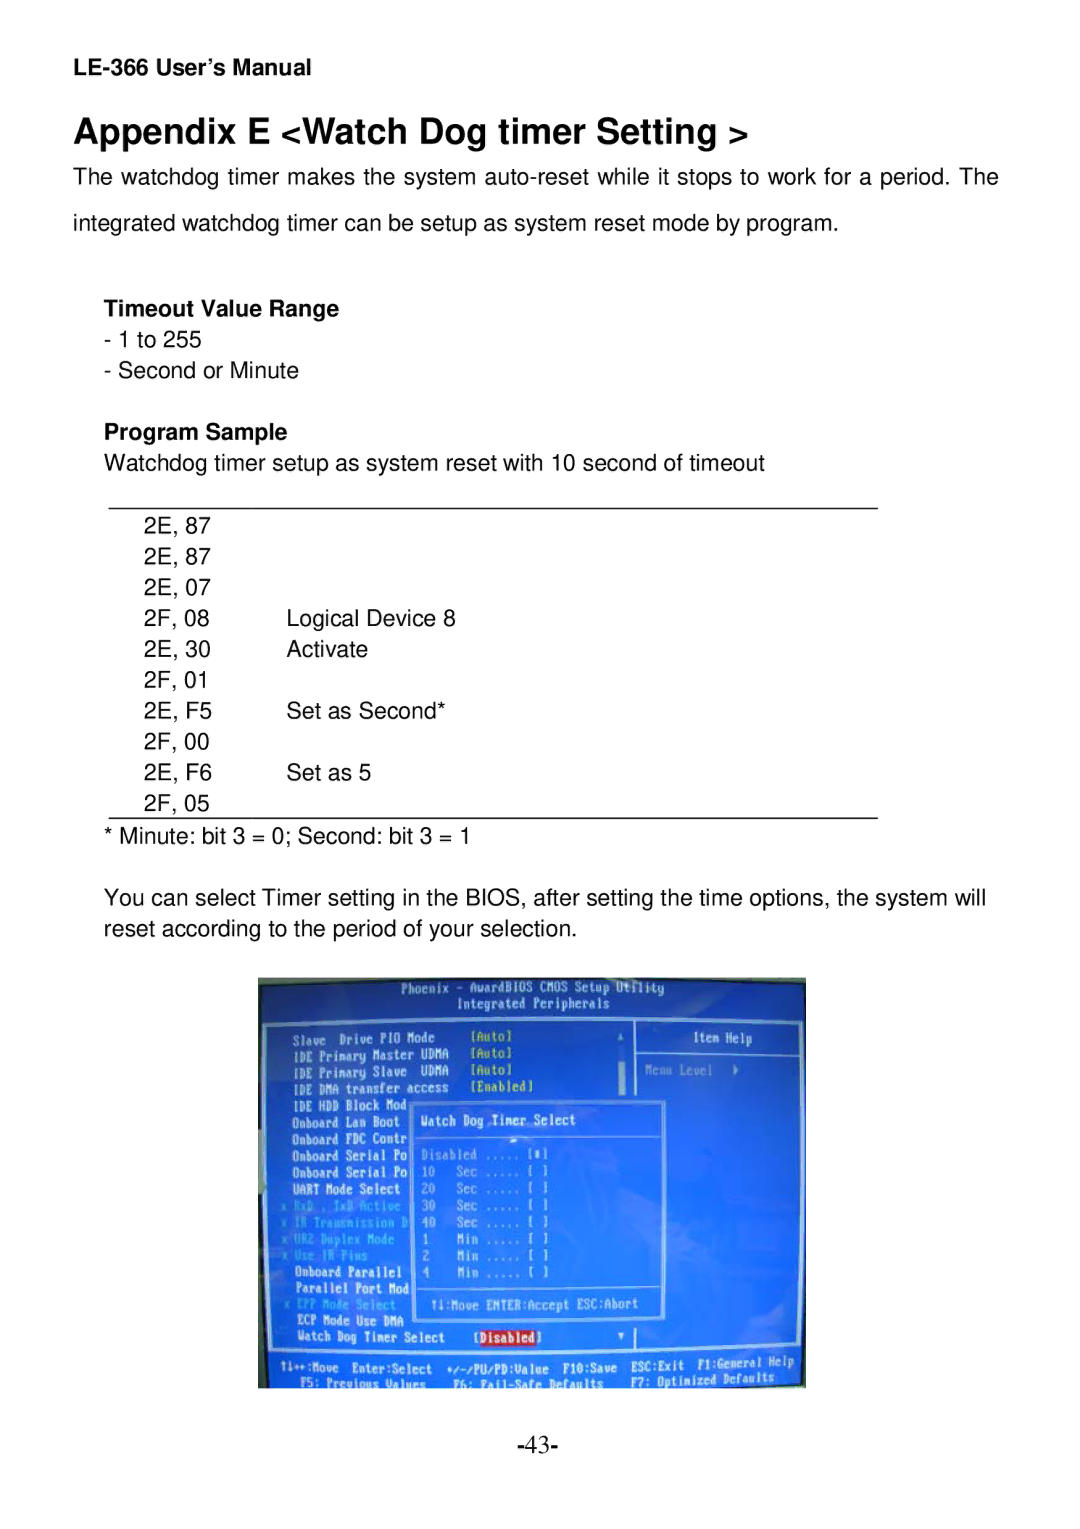 AMD LX800 user manual Appendix E Watch Dog timer Setting, Program Sample 